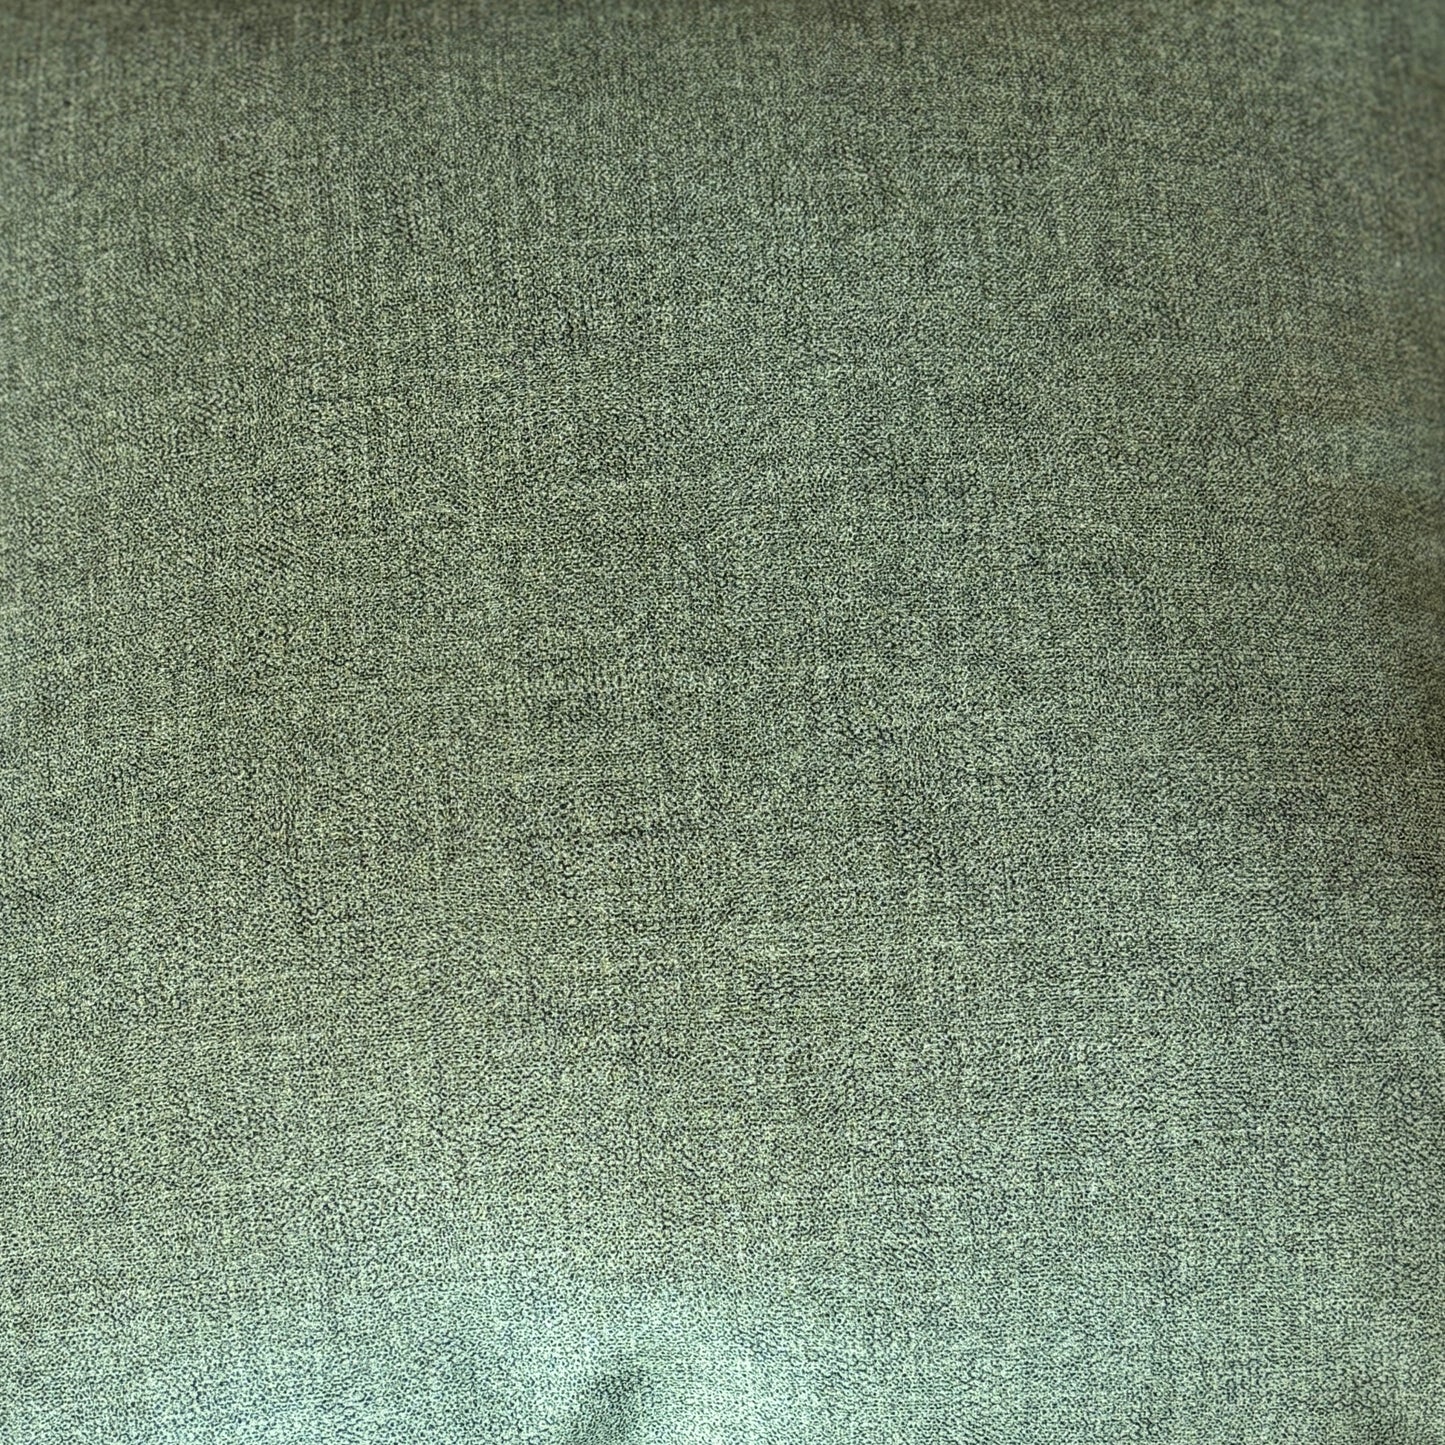 Solid Olive Green Velvet Cushion Cover 18 x 18